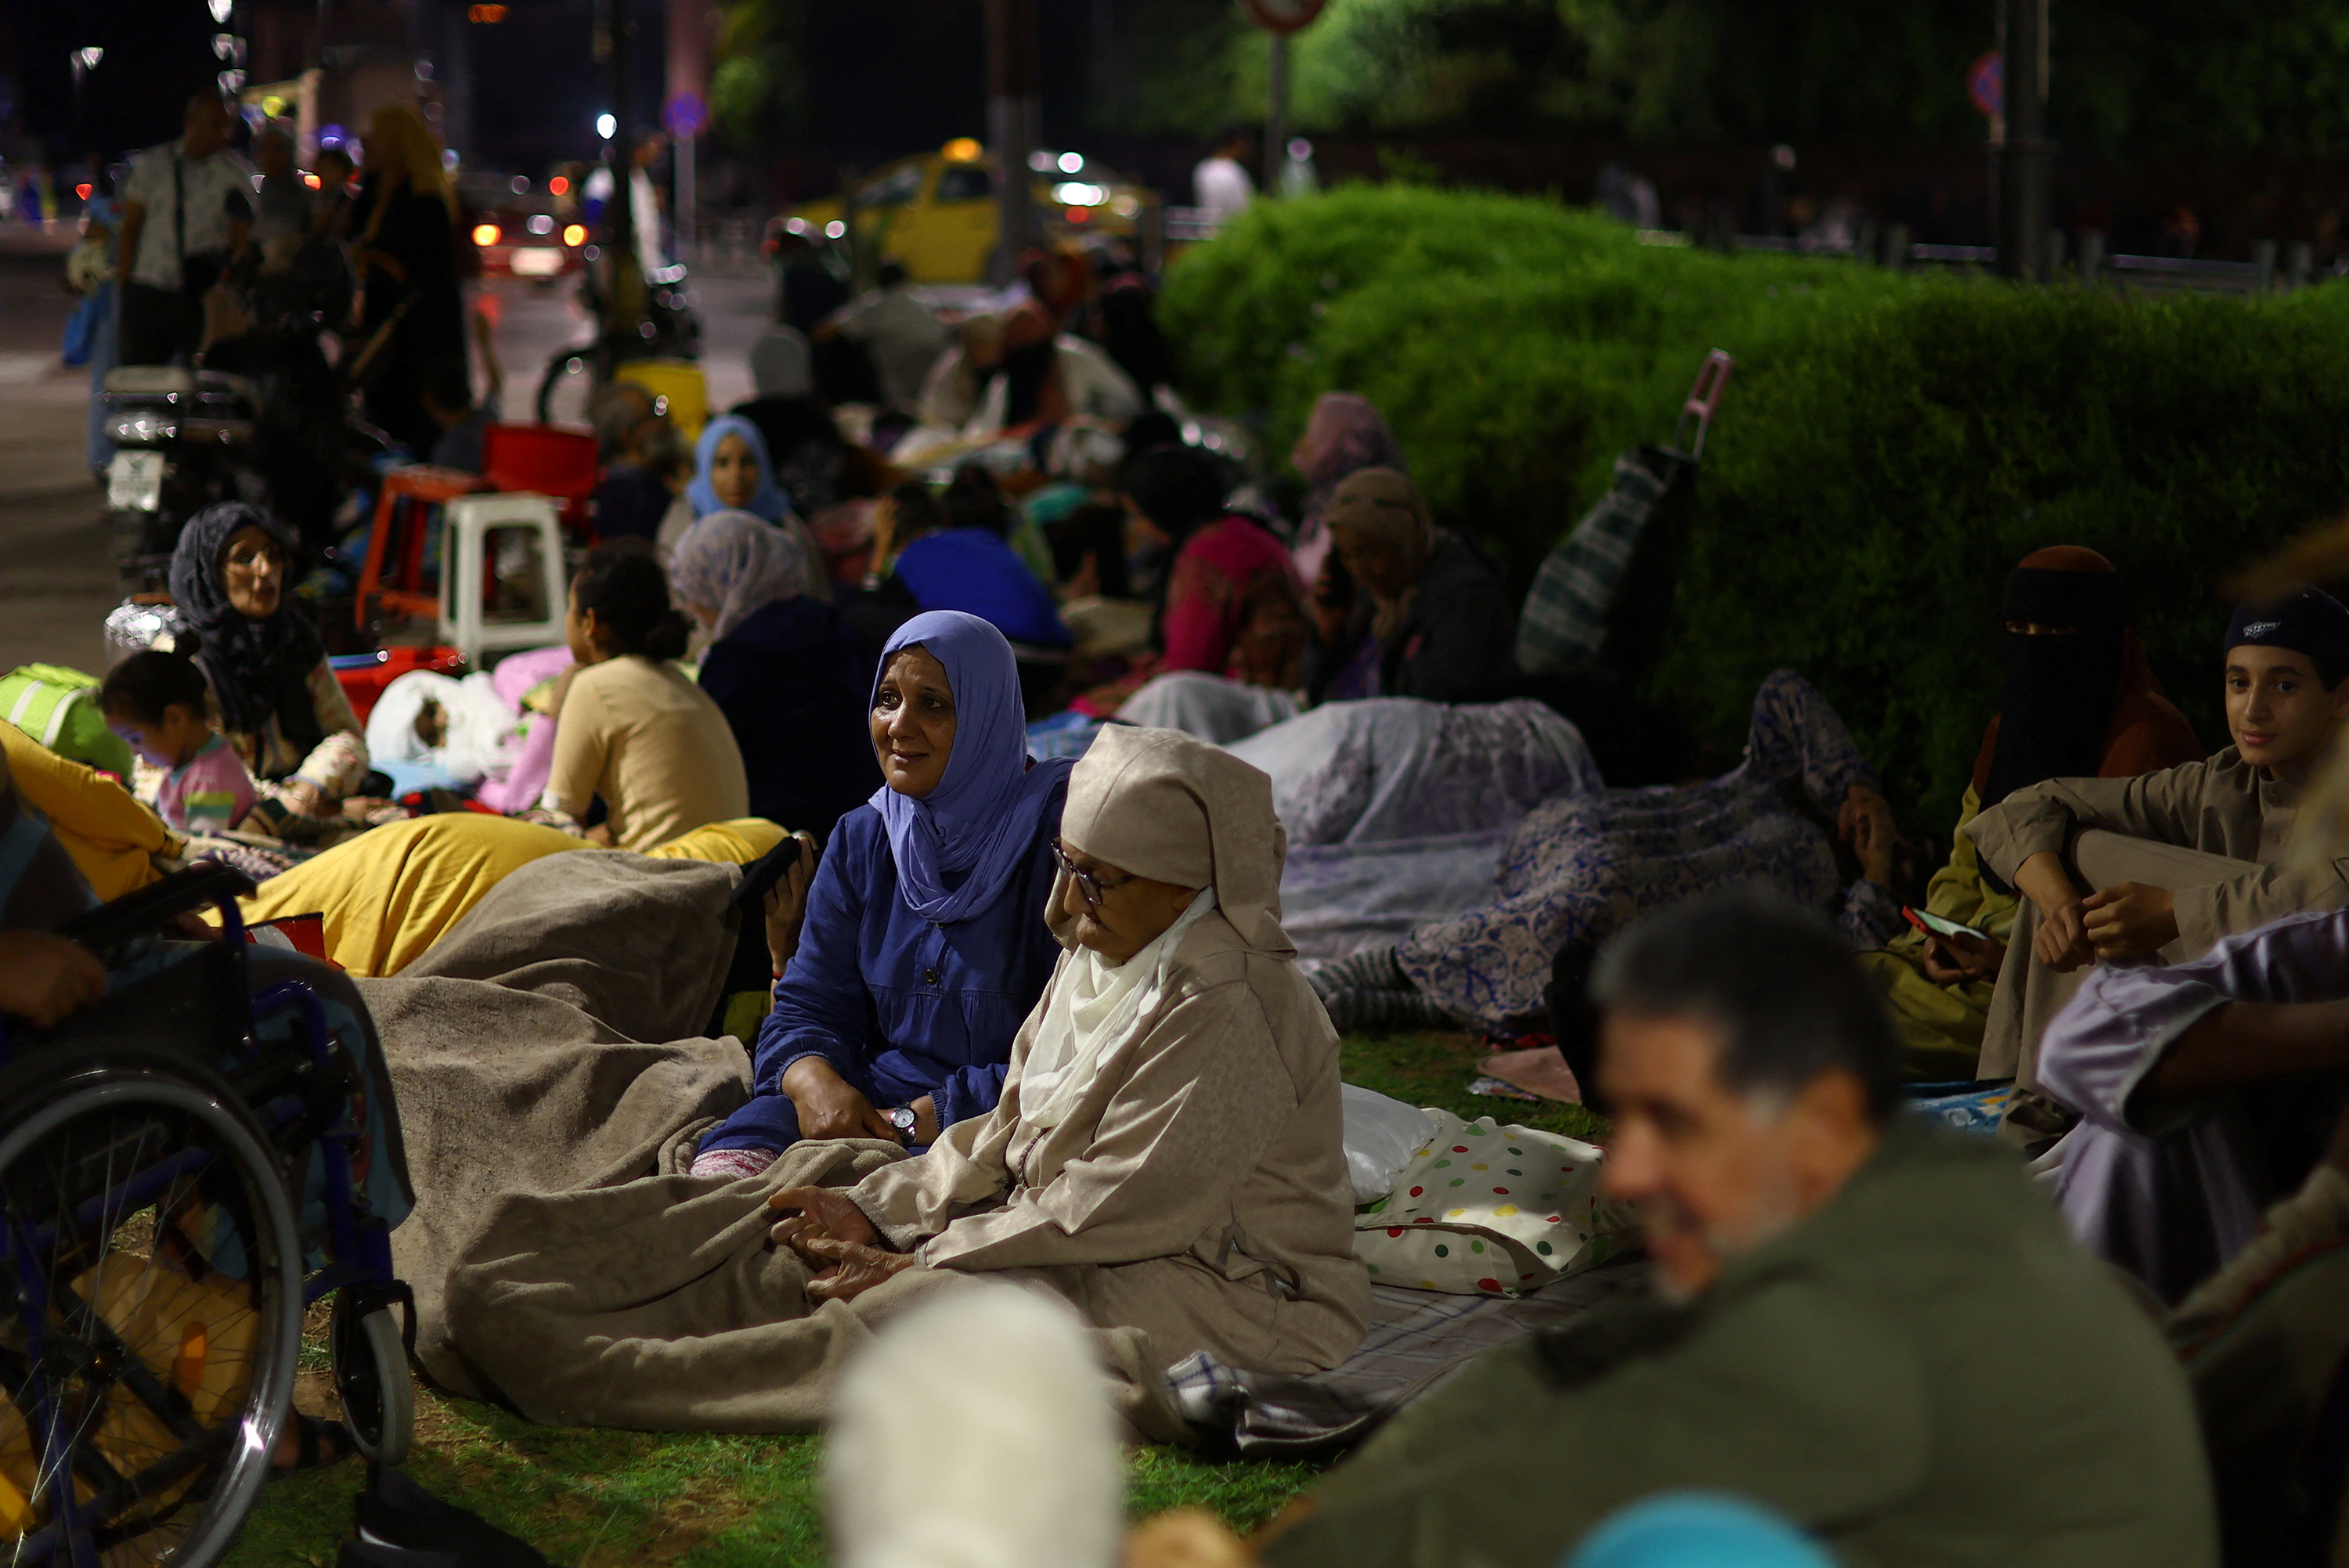 Residents rest outside in central Marrakech, Morocco, September 9.